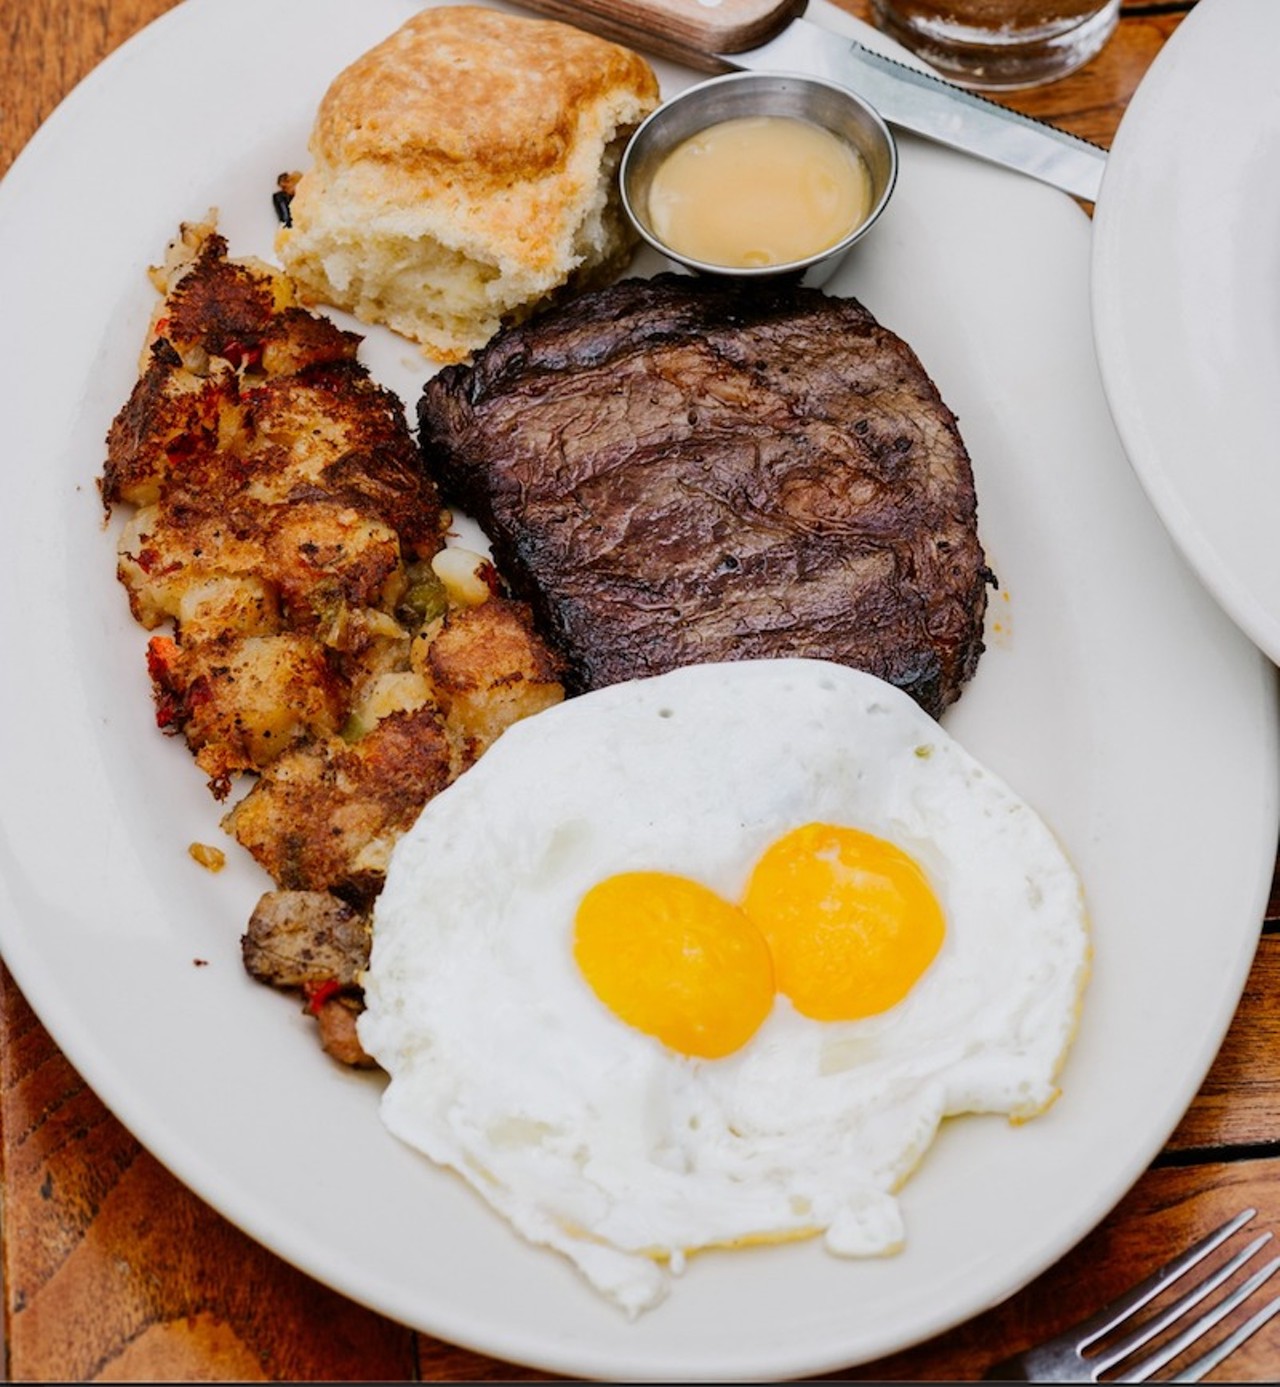 Best Breakfast/Brunch (Washtenaw): Zingerman’s Roadhouse  
2501 Jackson Ave., Ann Arbor; 734-663-3663; zingermansroadhouse.com